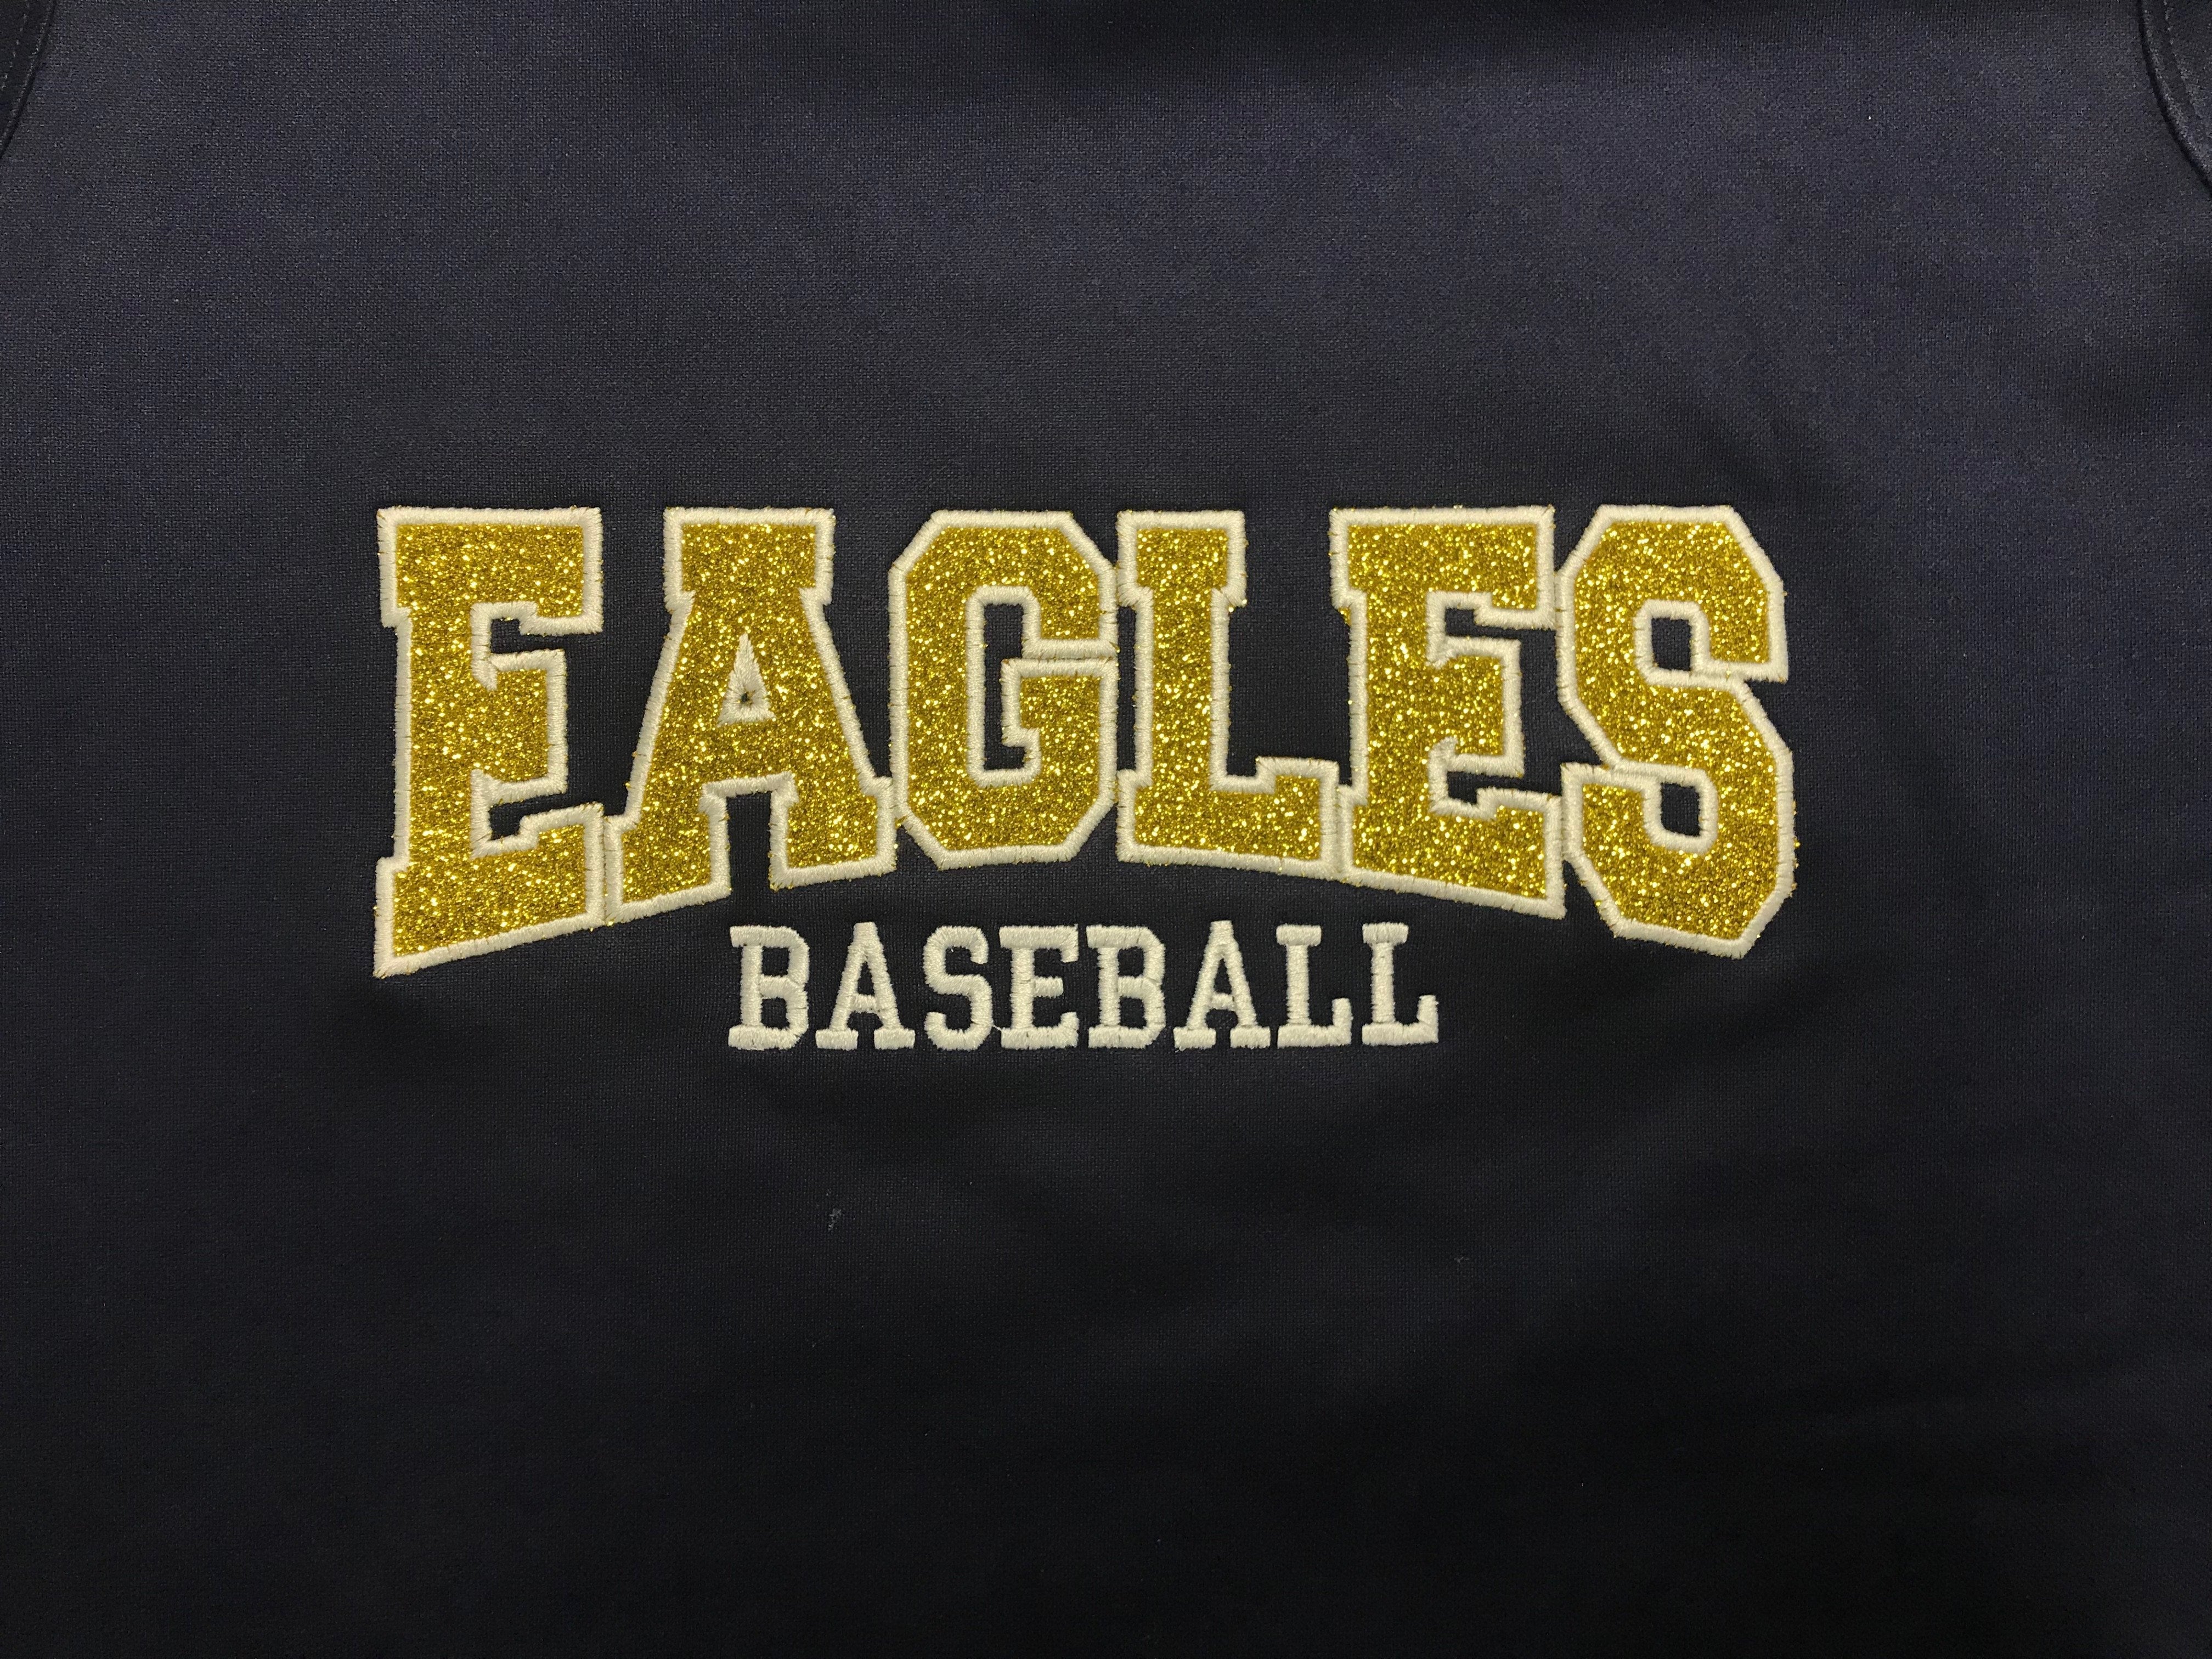 Northeast Eagles Baseball Venue Fleece Crew